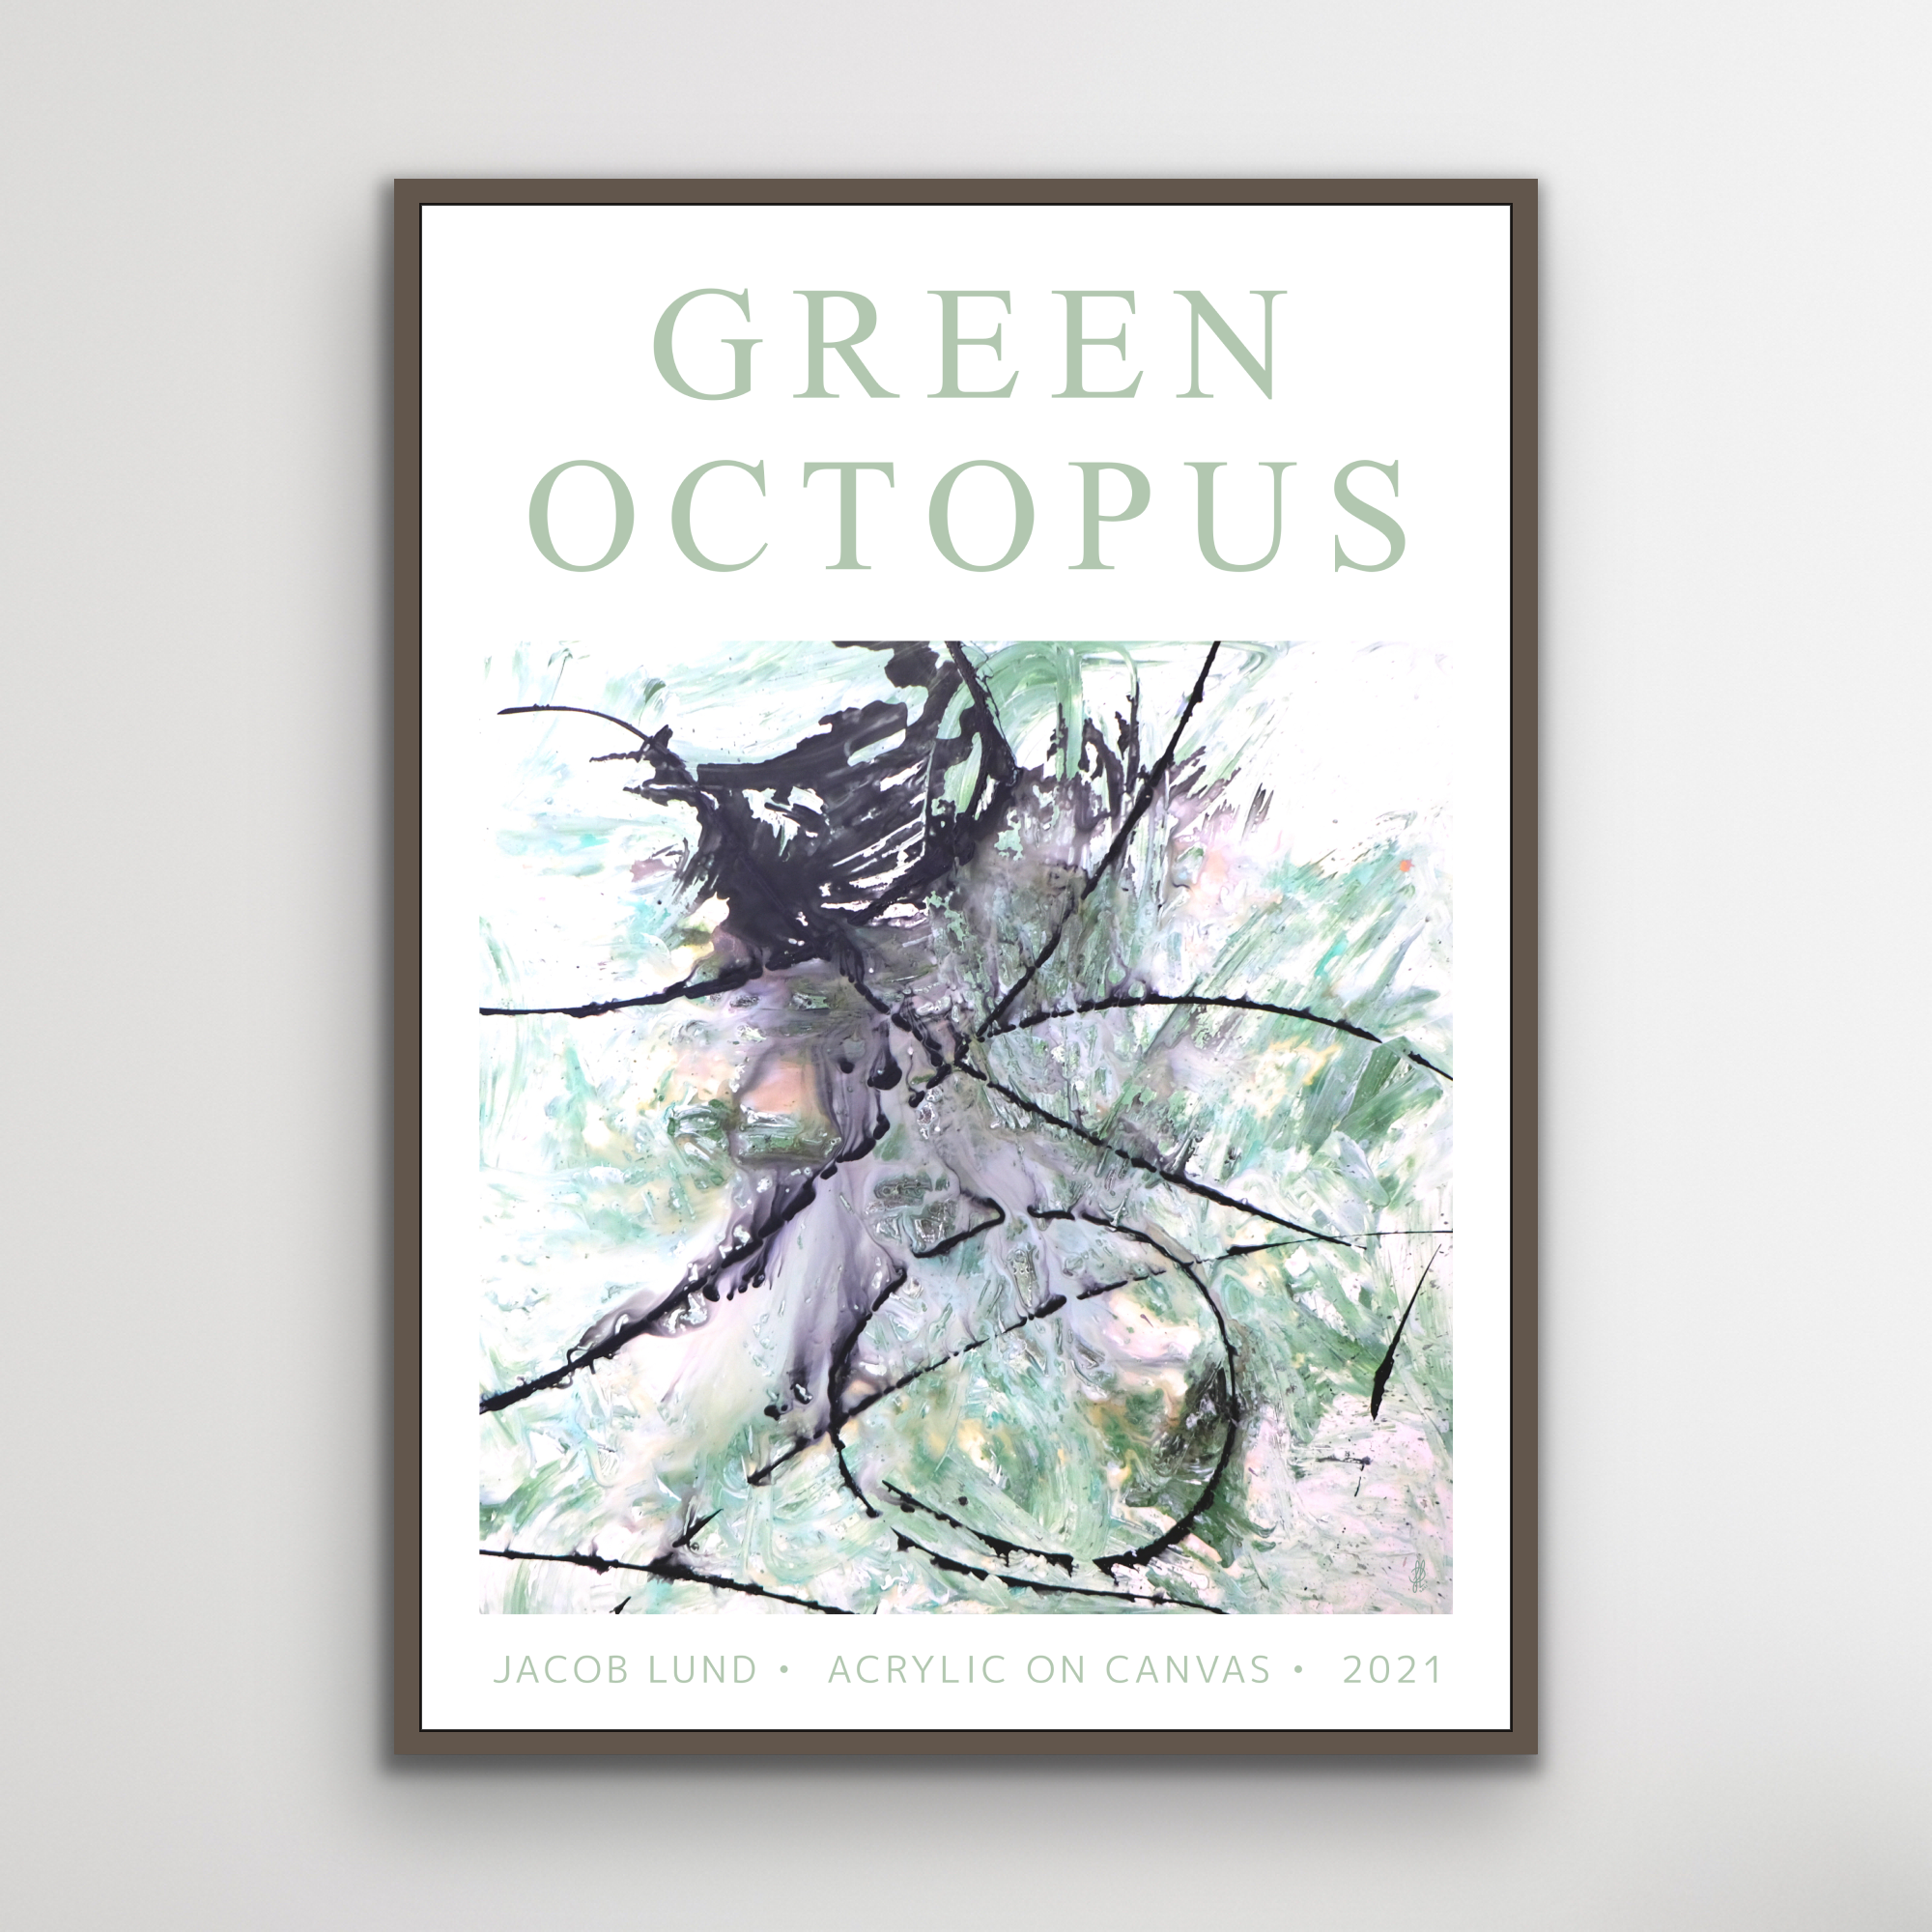 Plakat: "Green Octopus"